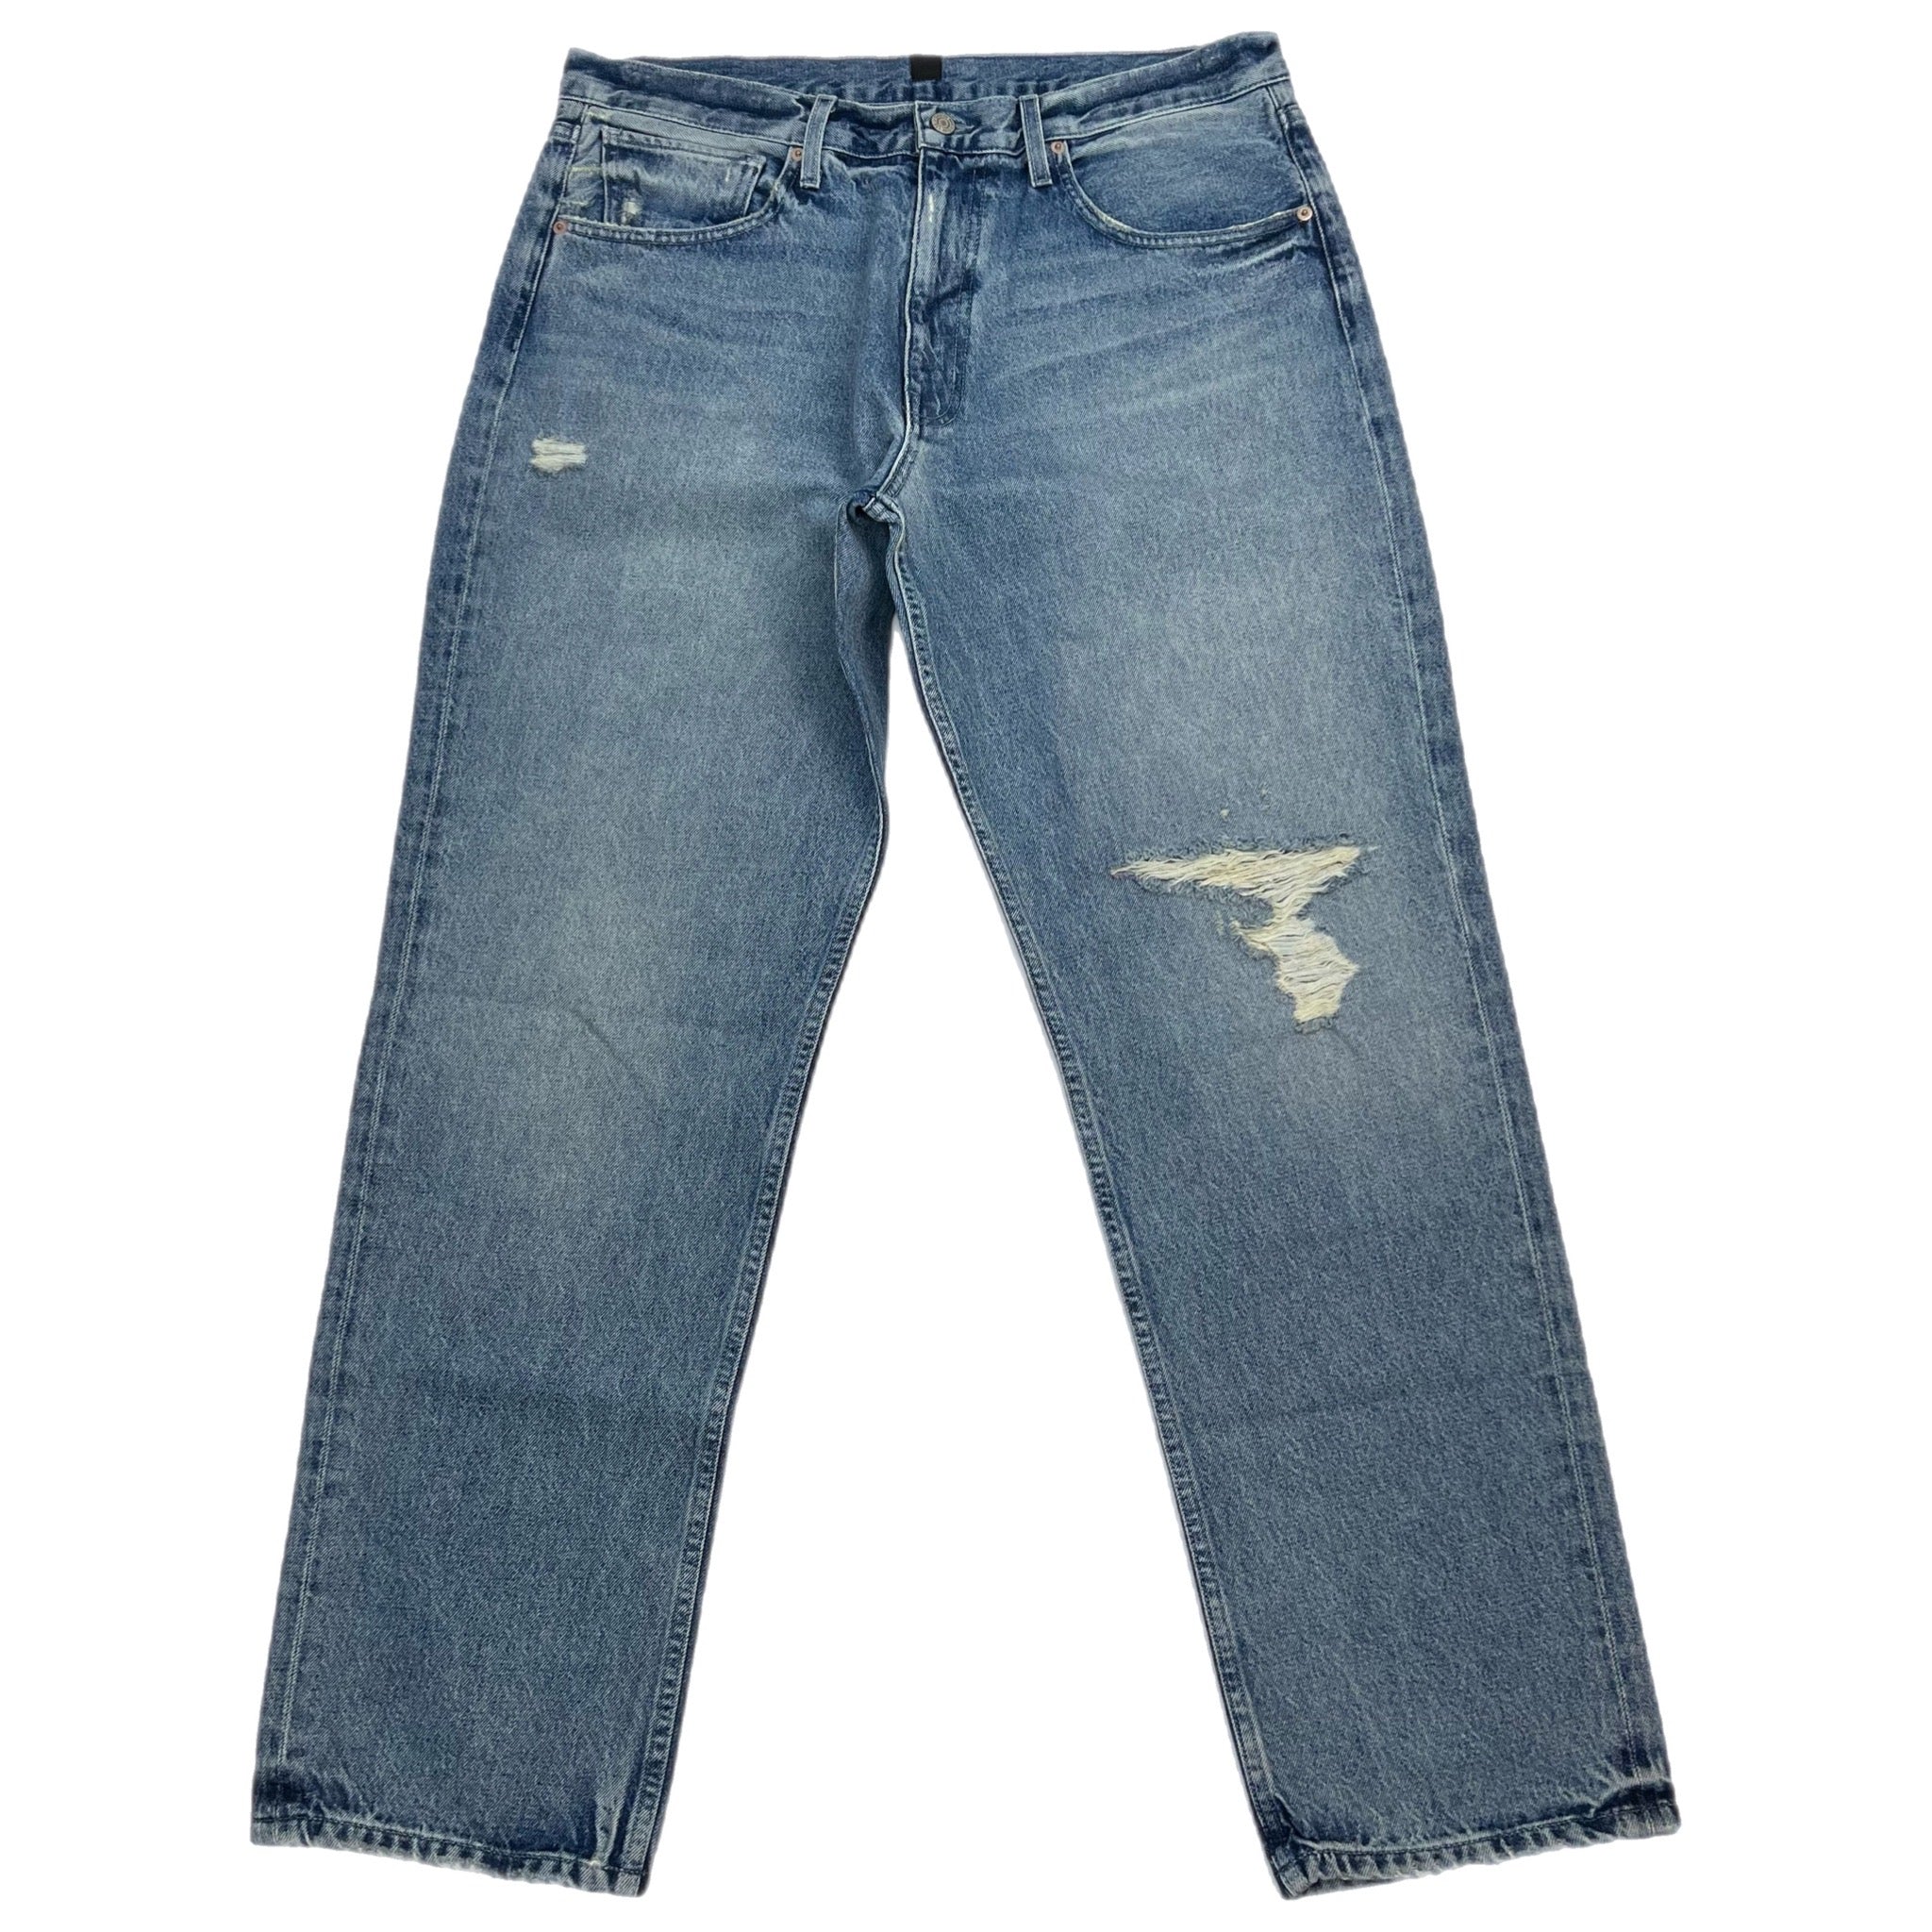 Yeezy Gap Engineered by Balenciaga 5 Pocket Denim Pants